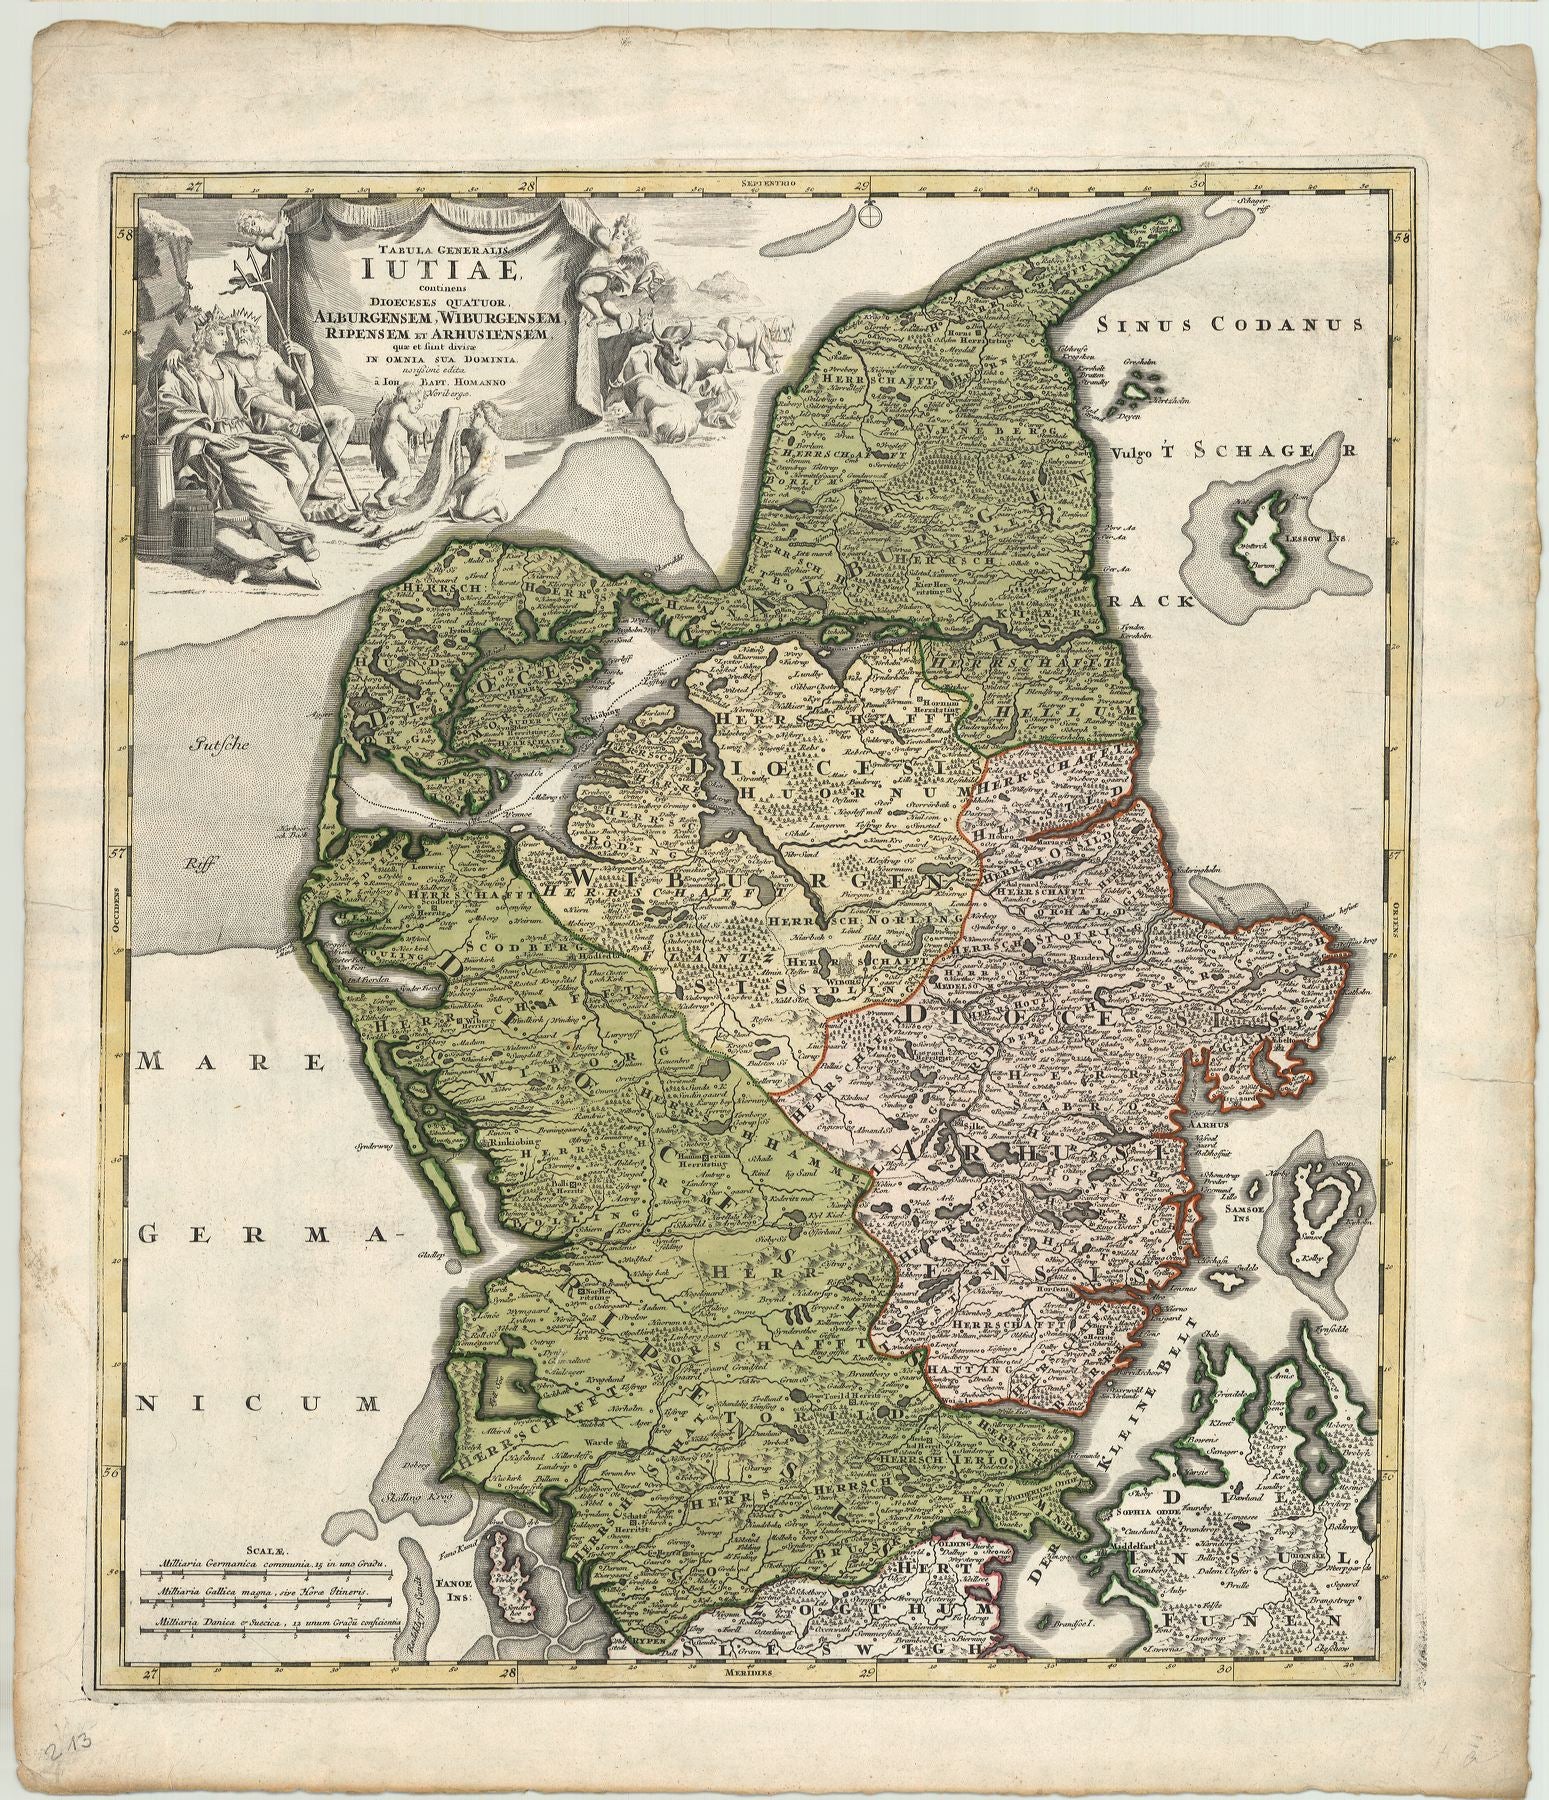 R2461  Homann, Johann Baptist: Tabula generalis Iutiae continens …. 1710